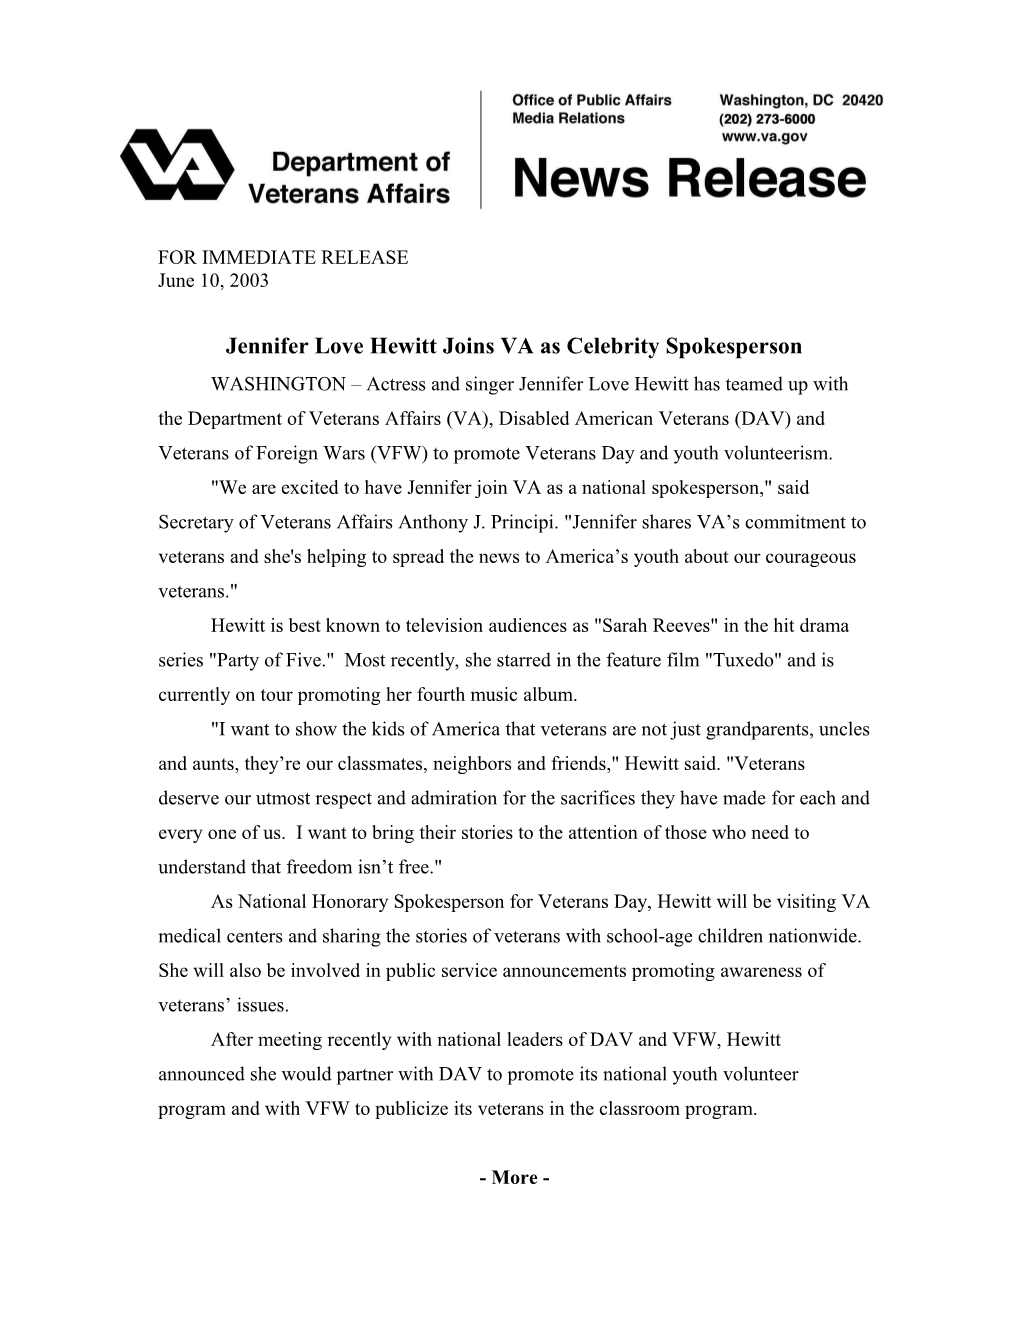 Jennifer Love Hewitt Joins VA As Celebrity Spokesperson